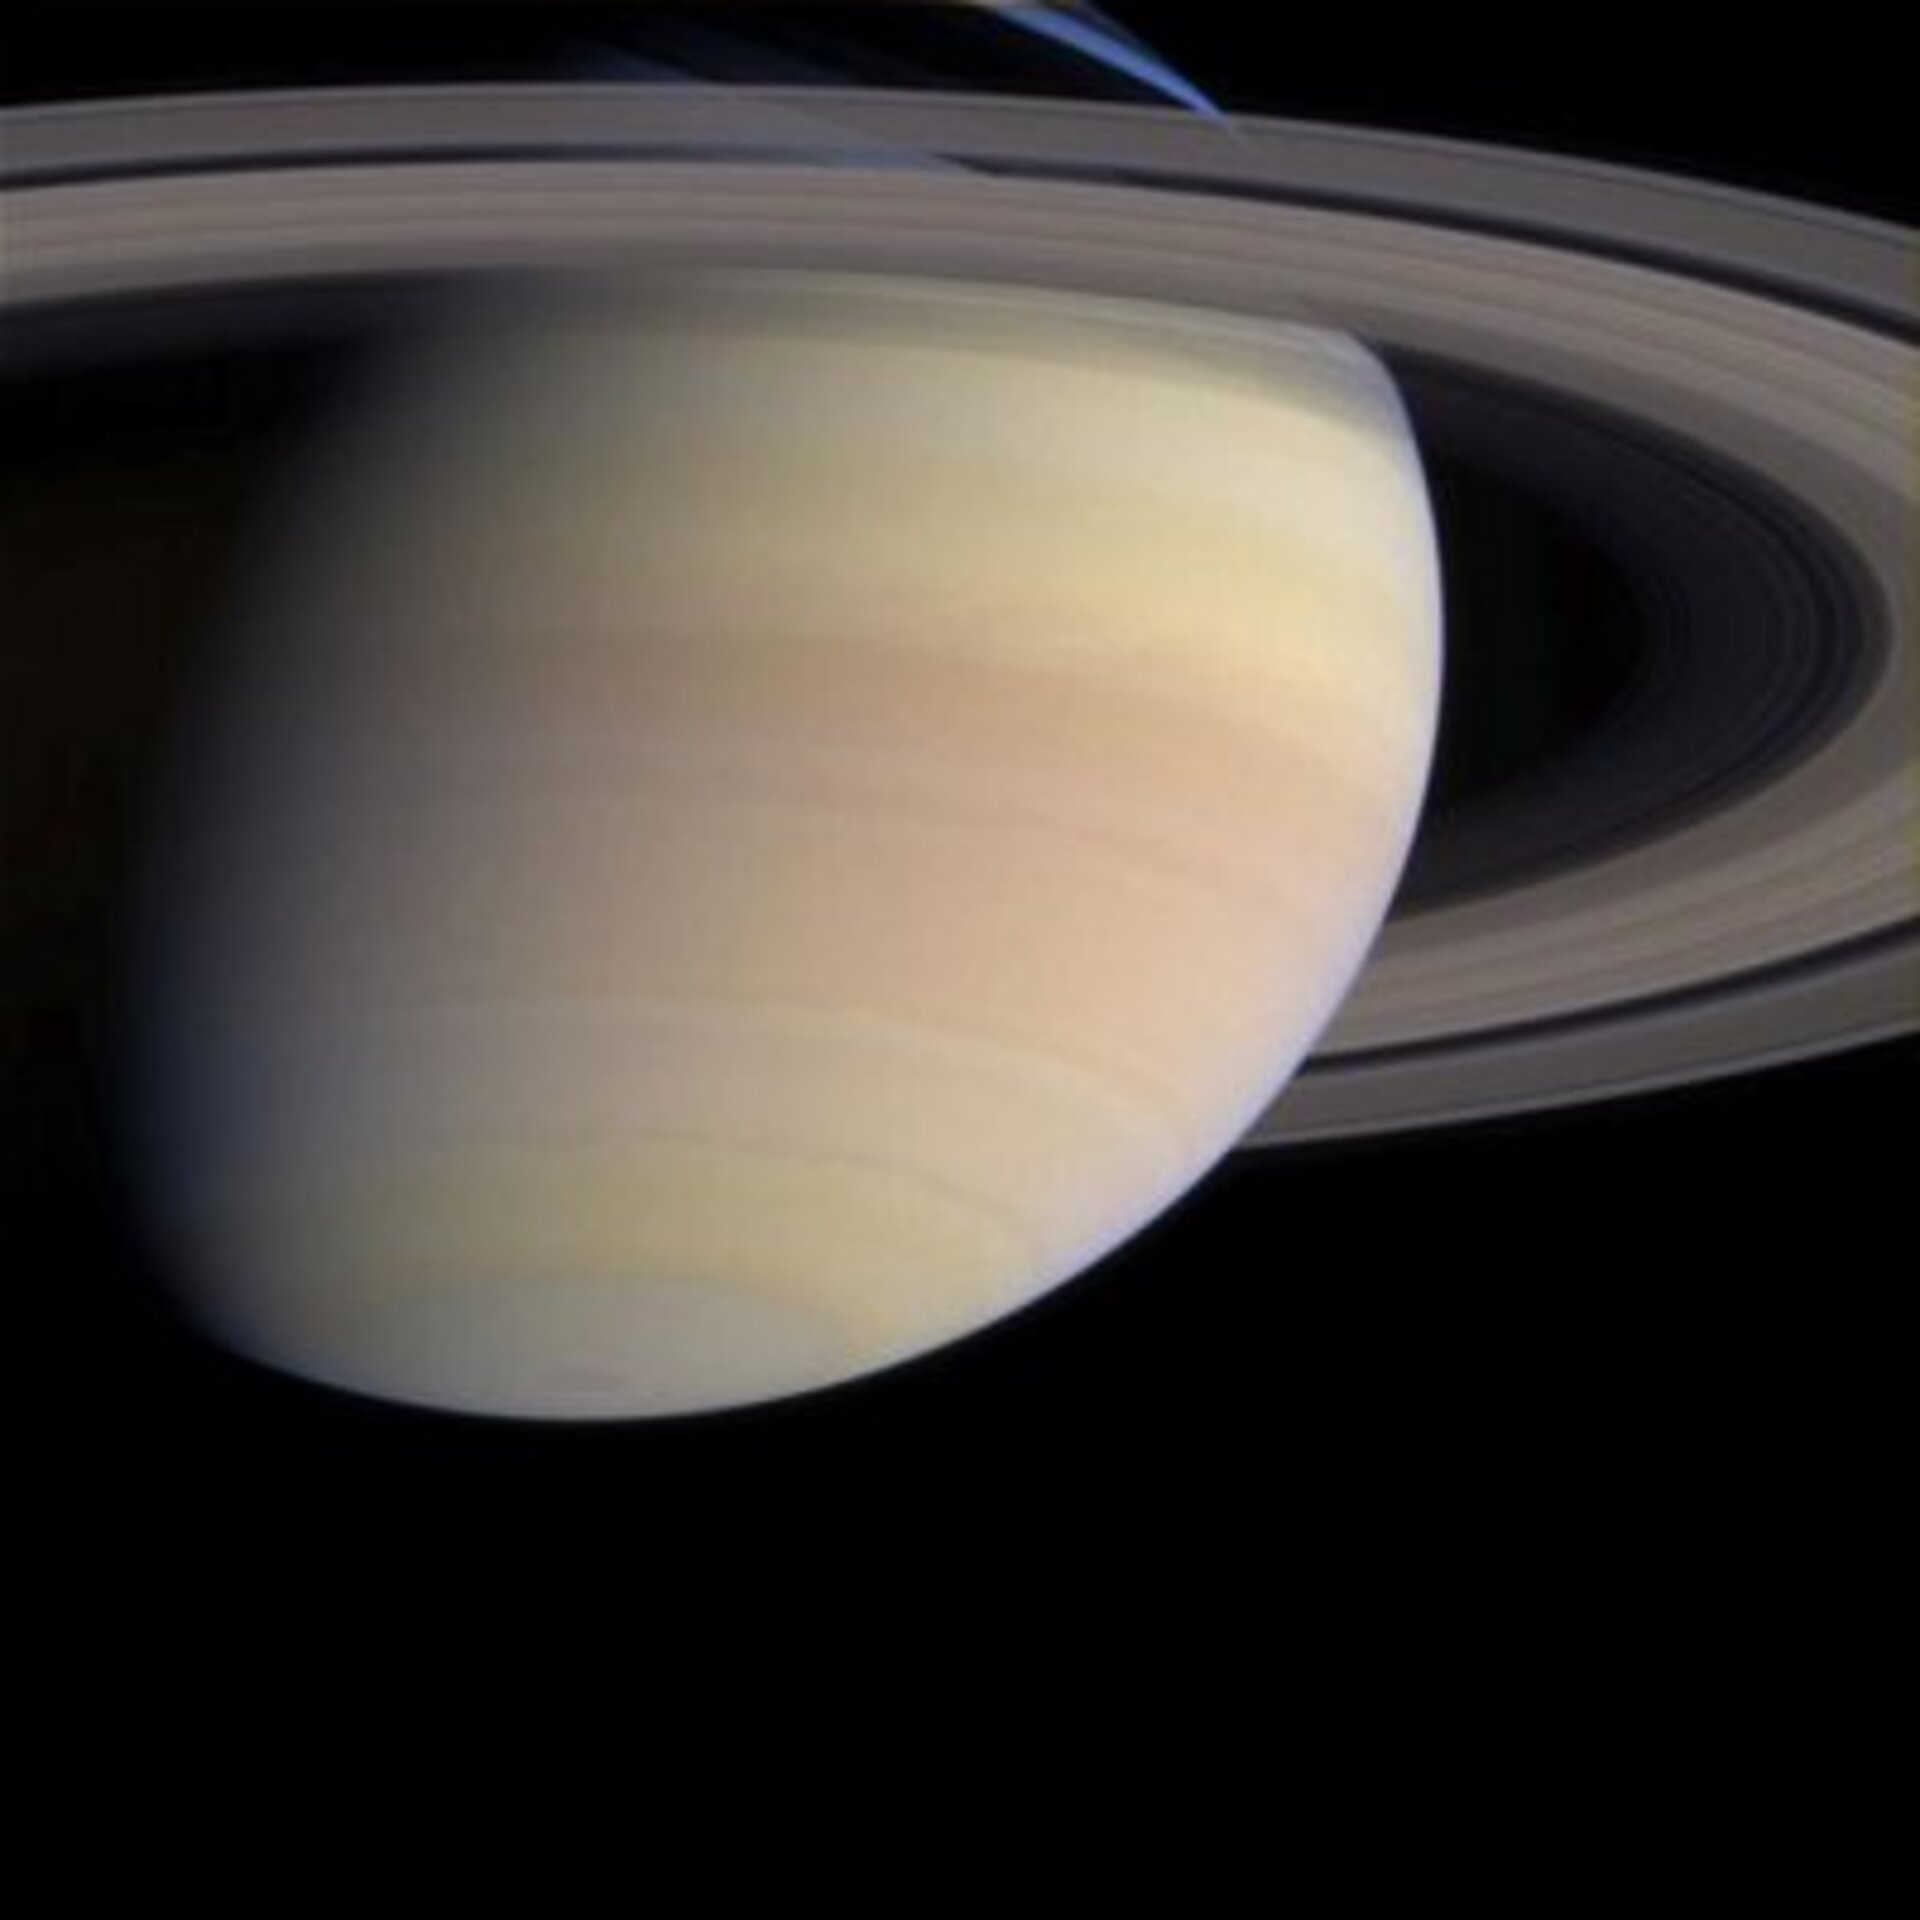 Colourful Saturn, getting closer